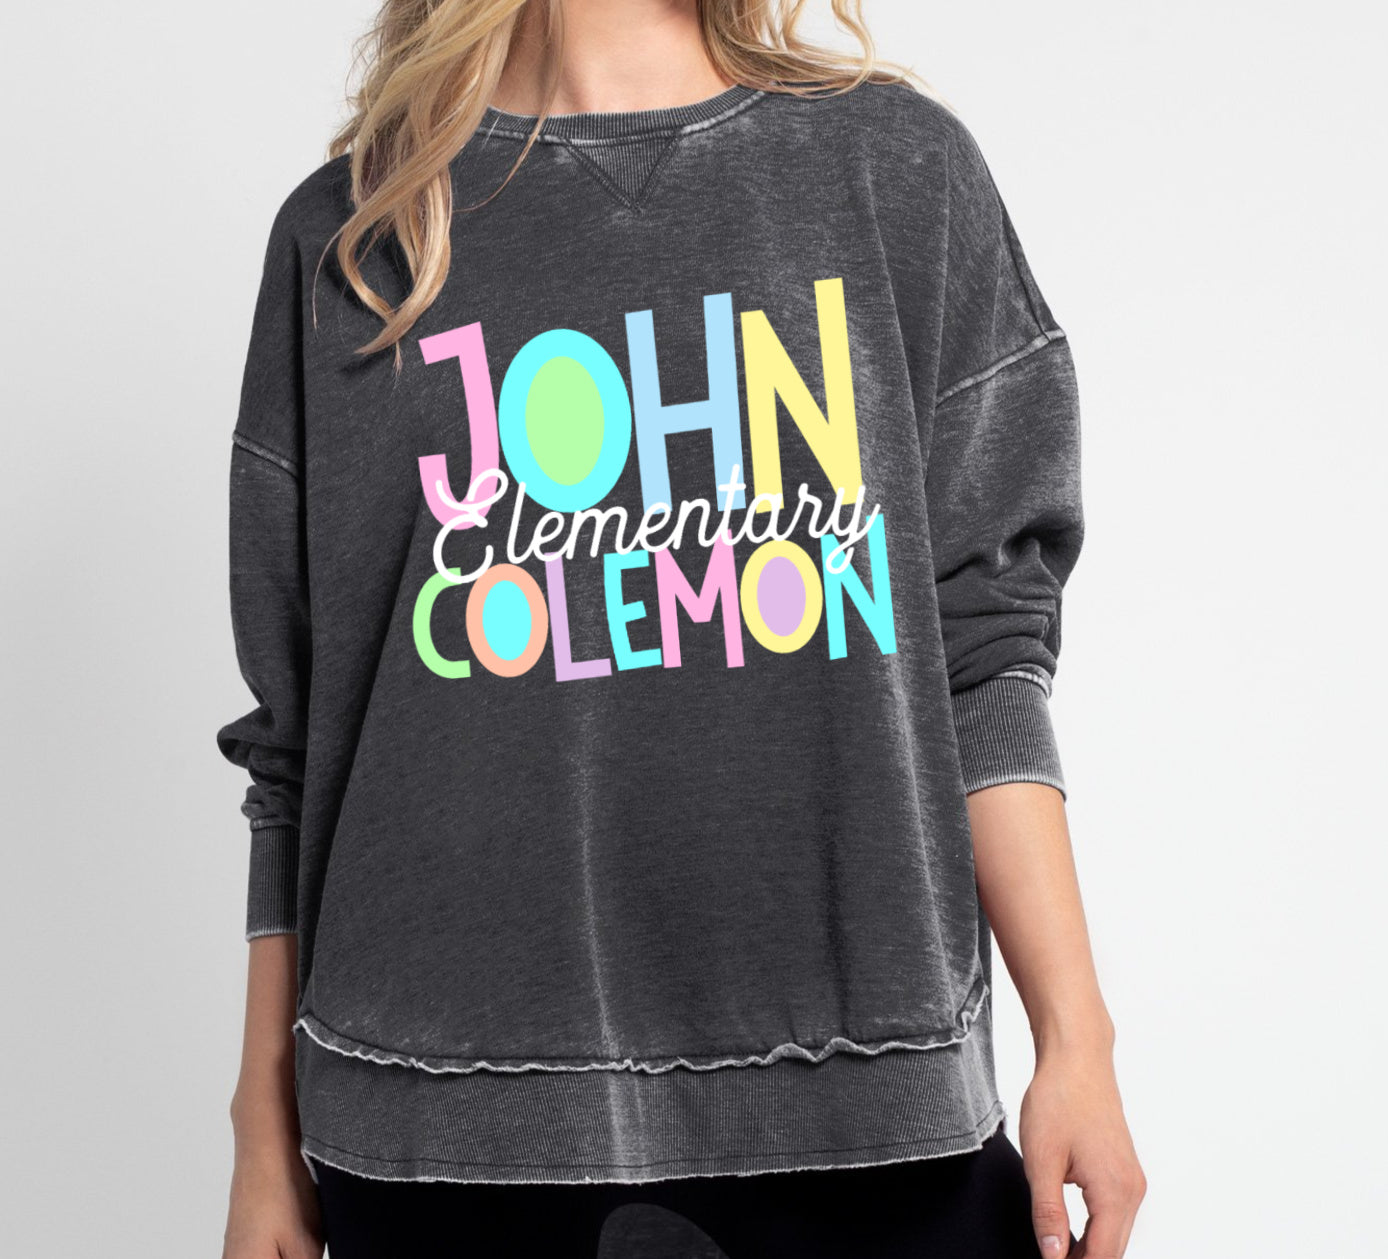 Acid Washed John Colemon Elementary Sweatshirt/ Unisex Sweatshirt